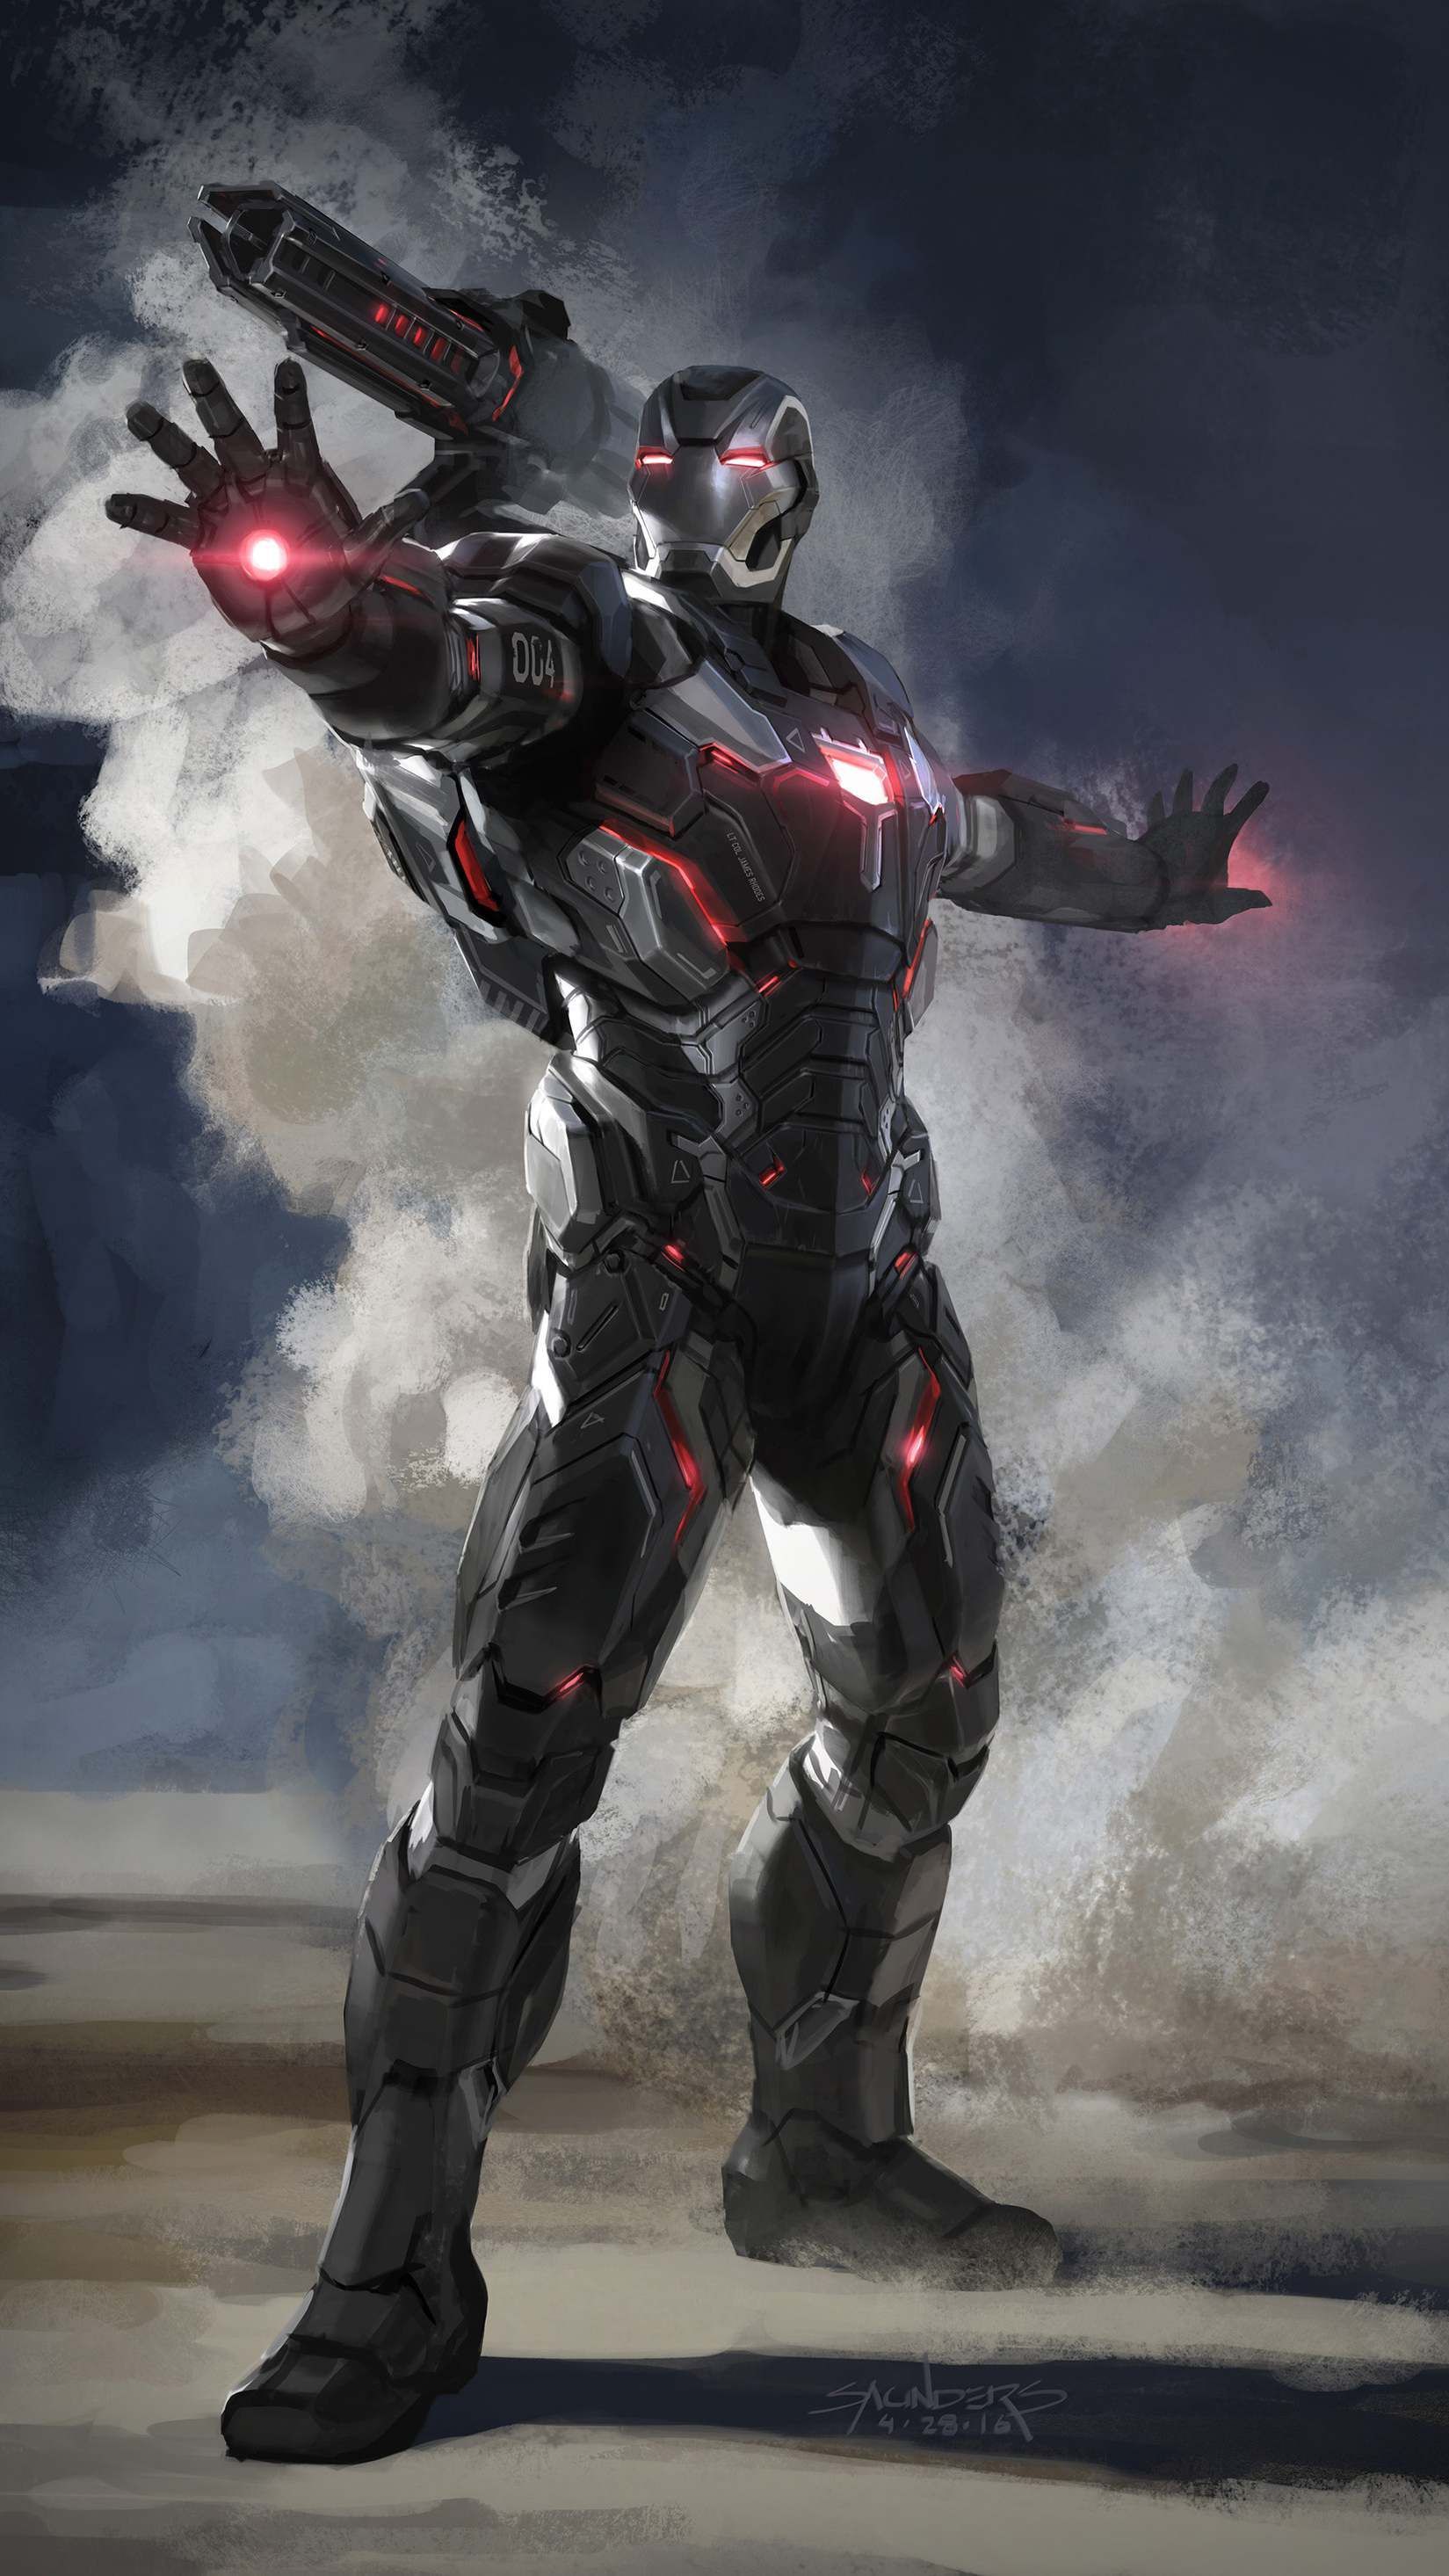 Iron man suit 2020 Wallpaper 4k Ultra HD ID:6652